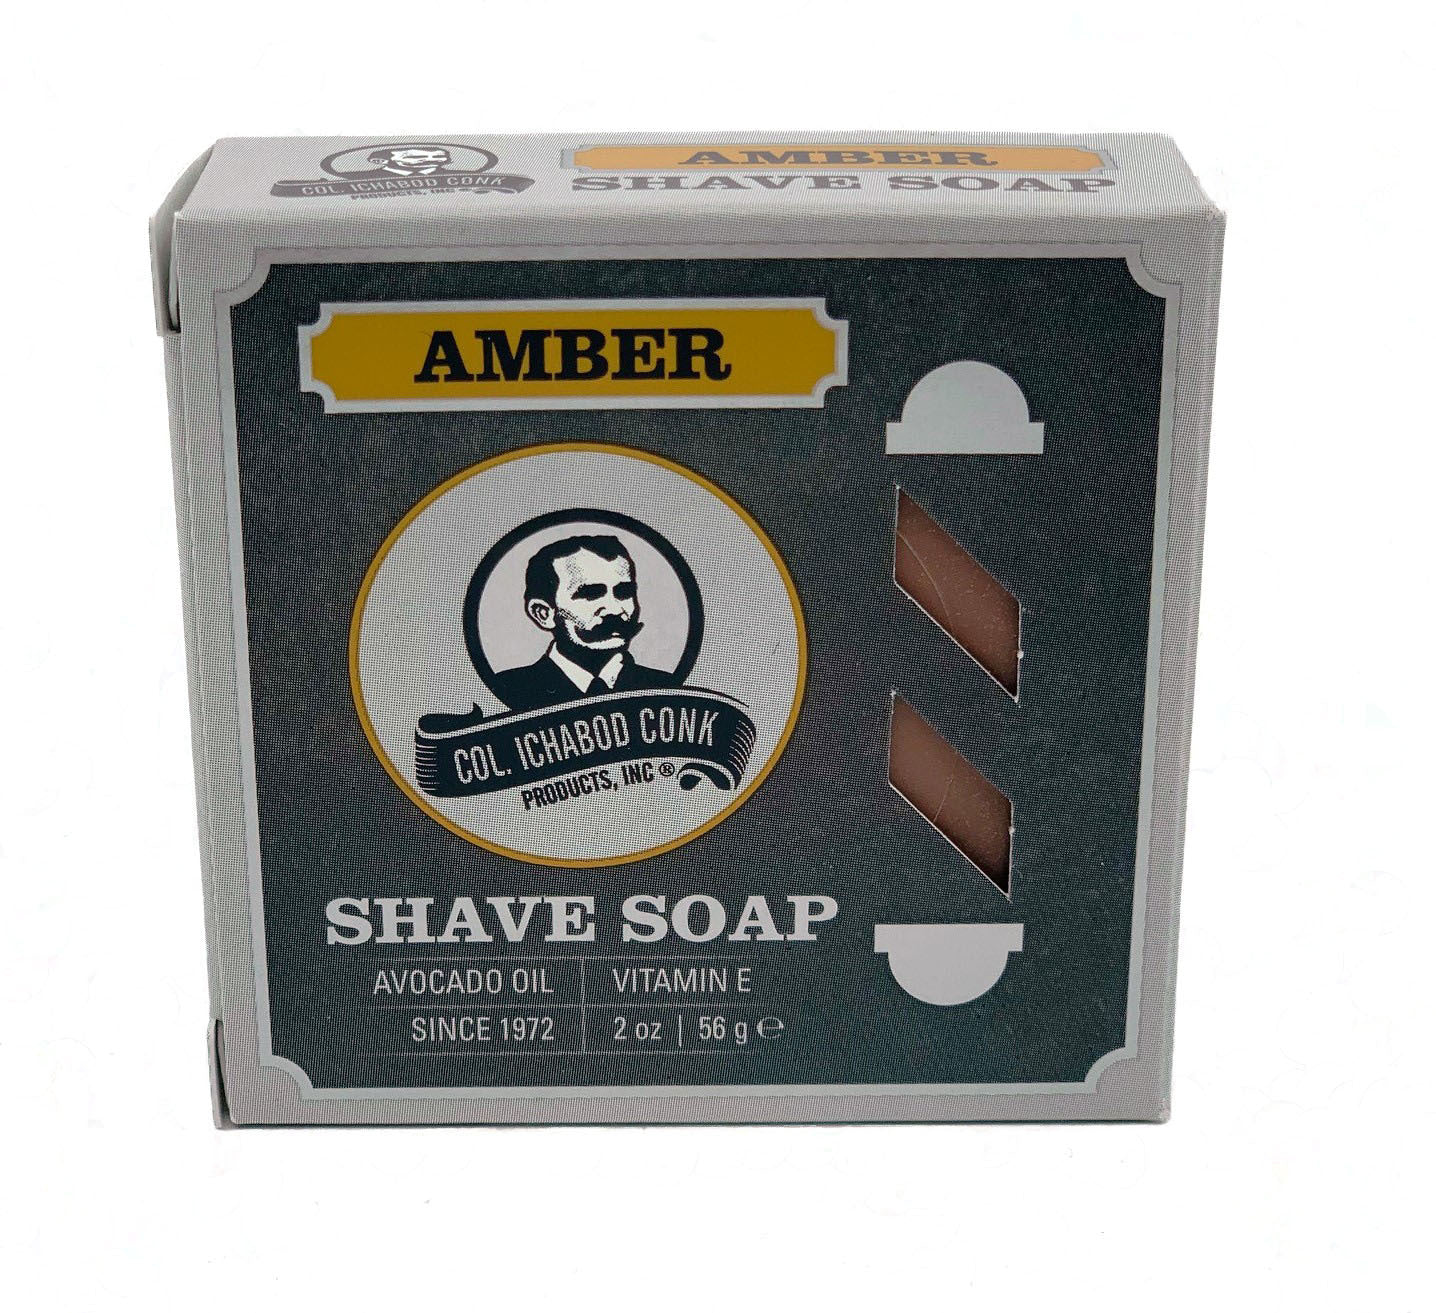 Colonel Conk Amber Shave Soap (64g/2.25oz)